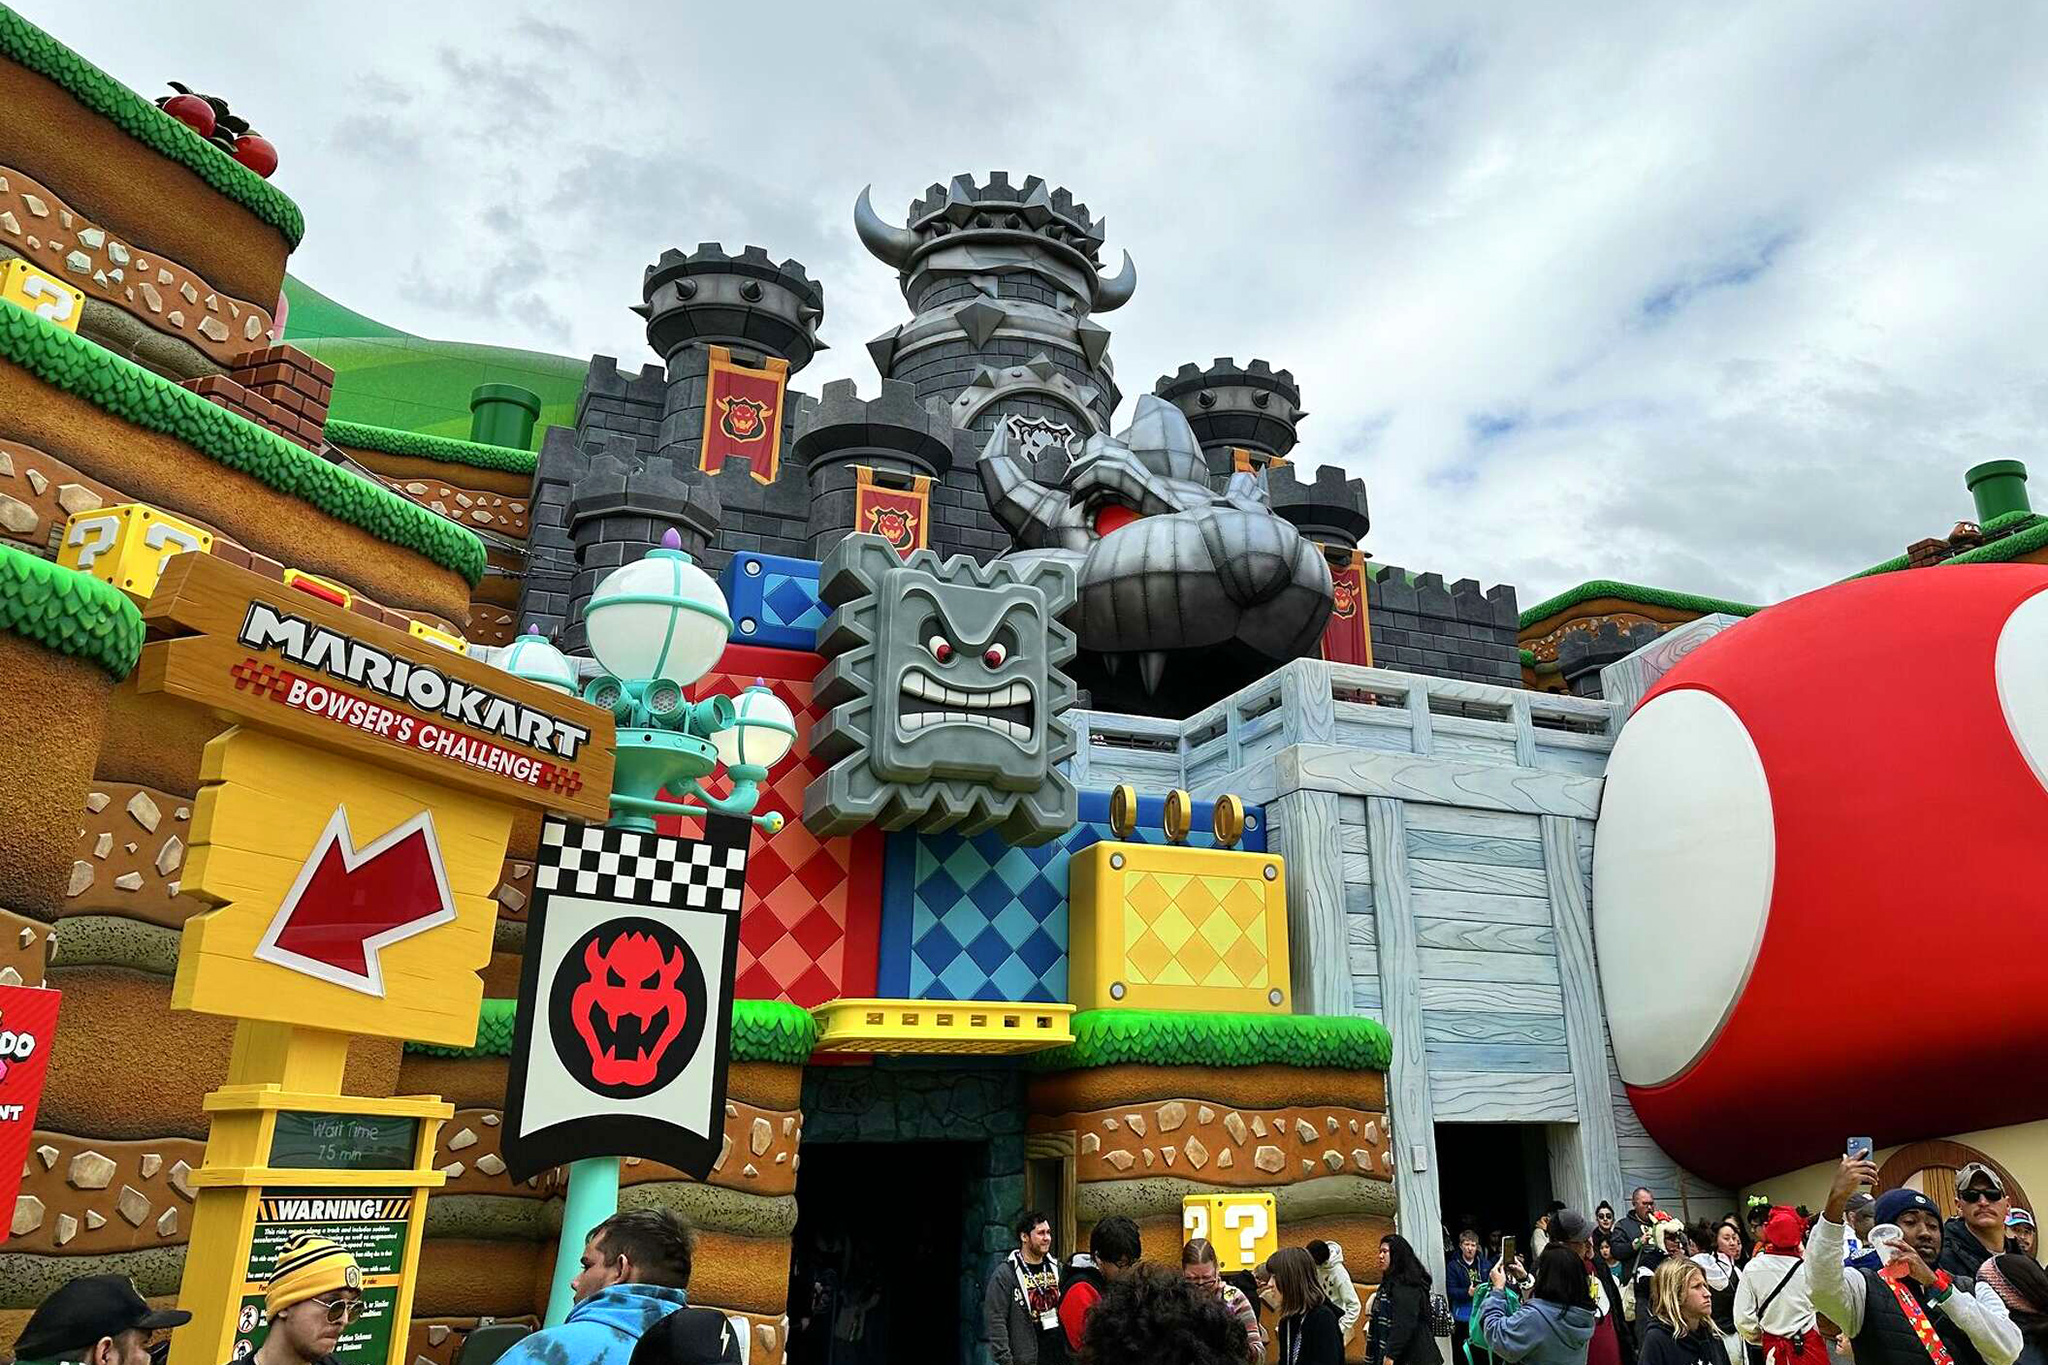 Ride at new Super Nintendo World theme park dubbed 'fatphobic' - SFGATE